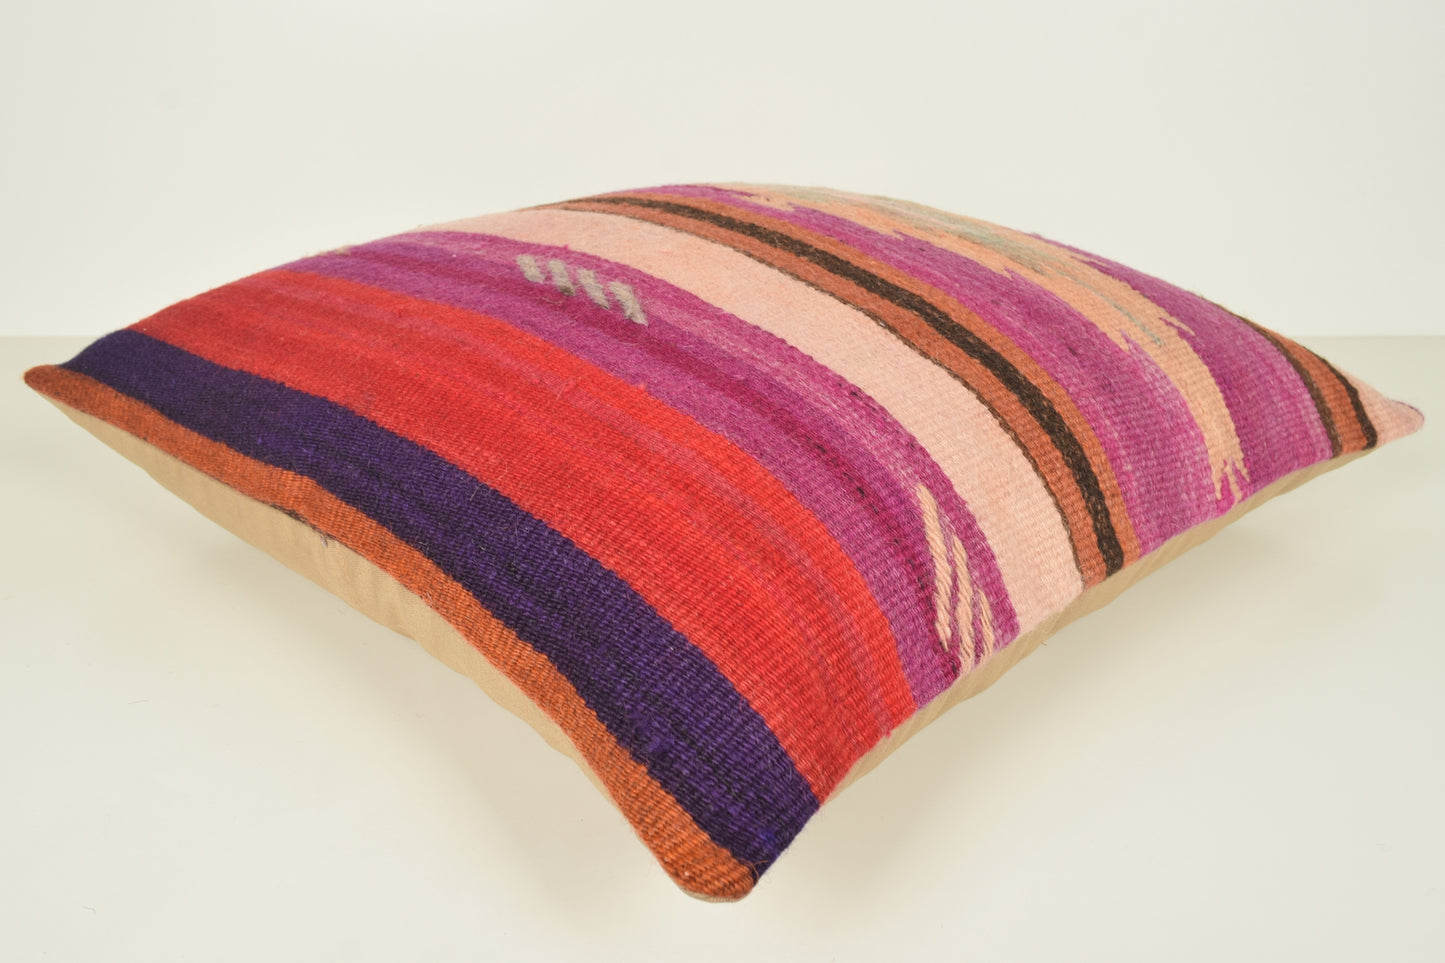 Turkish Floor Pillows A00801 Decorative Throw pillow case Knitting cushion covers 24x24